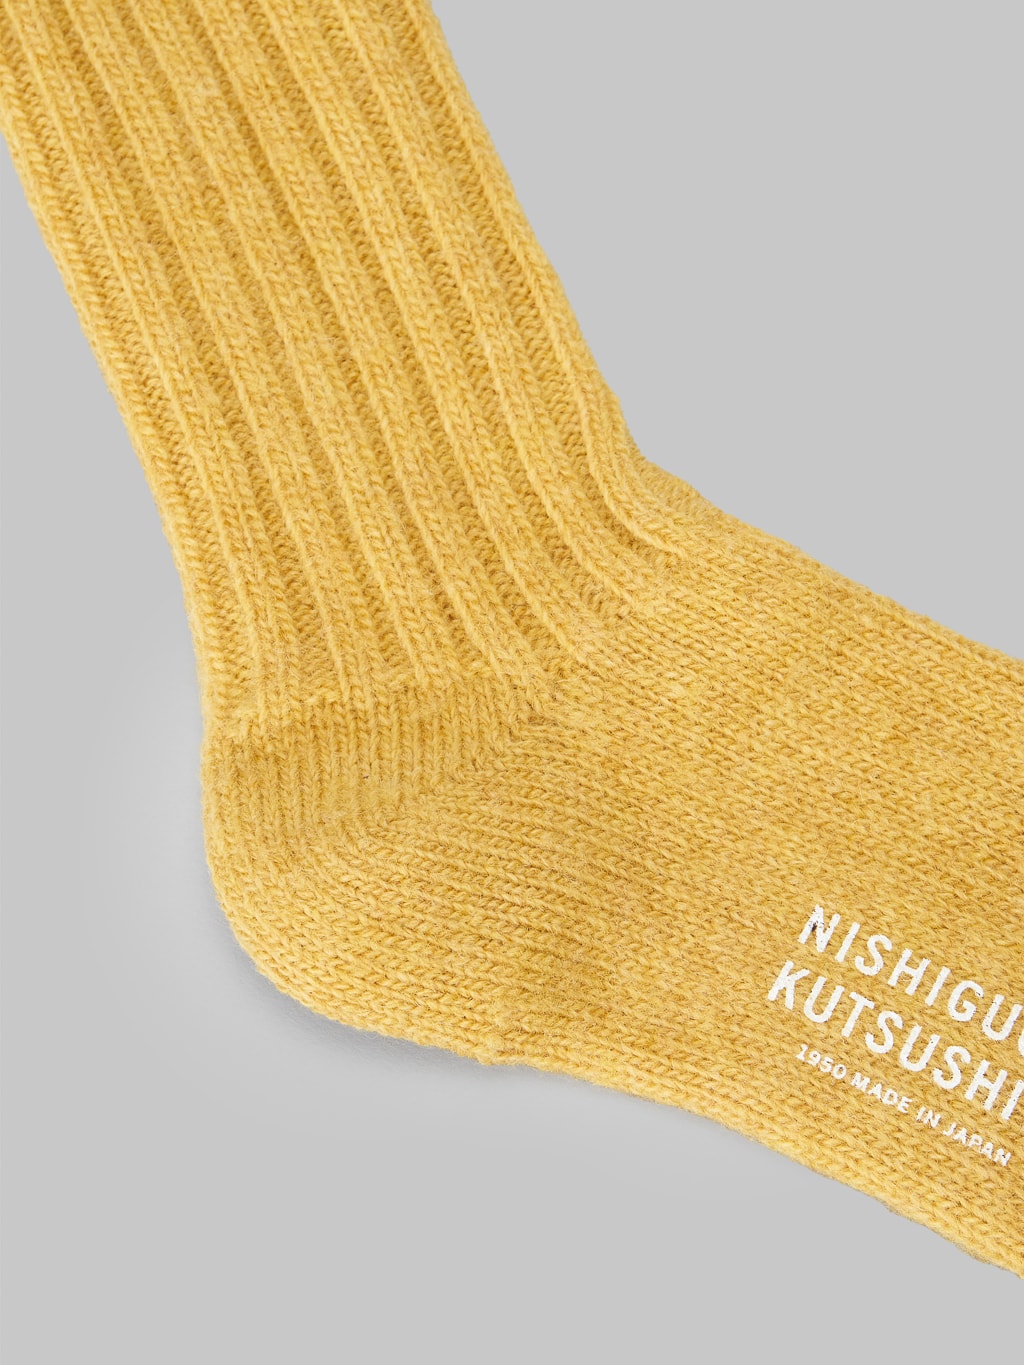 nishiguchi kutsushita wool ribbed socks apple soda reinforced heel